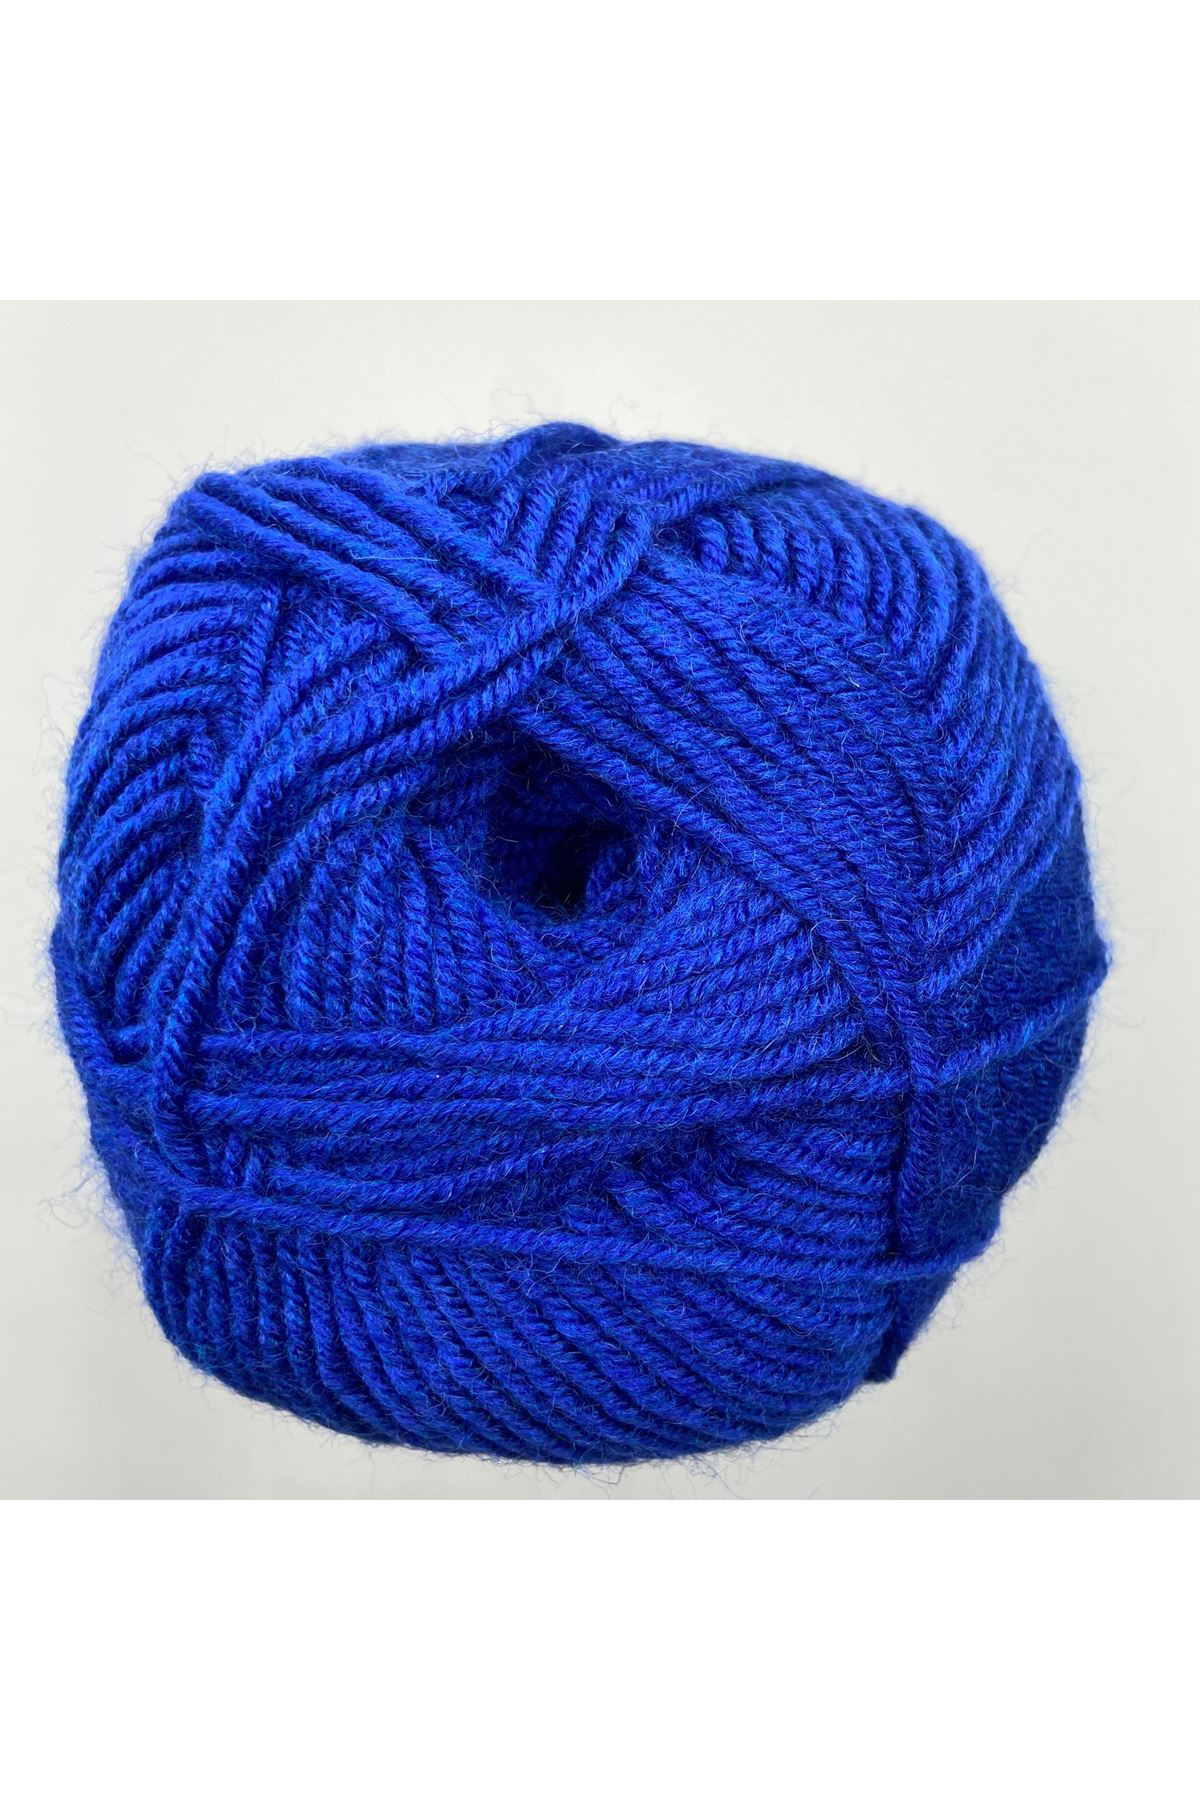 Lady Yarn Super Wool NW019 Saks Mavi